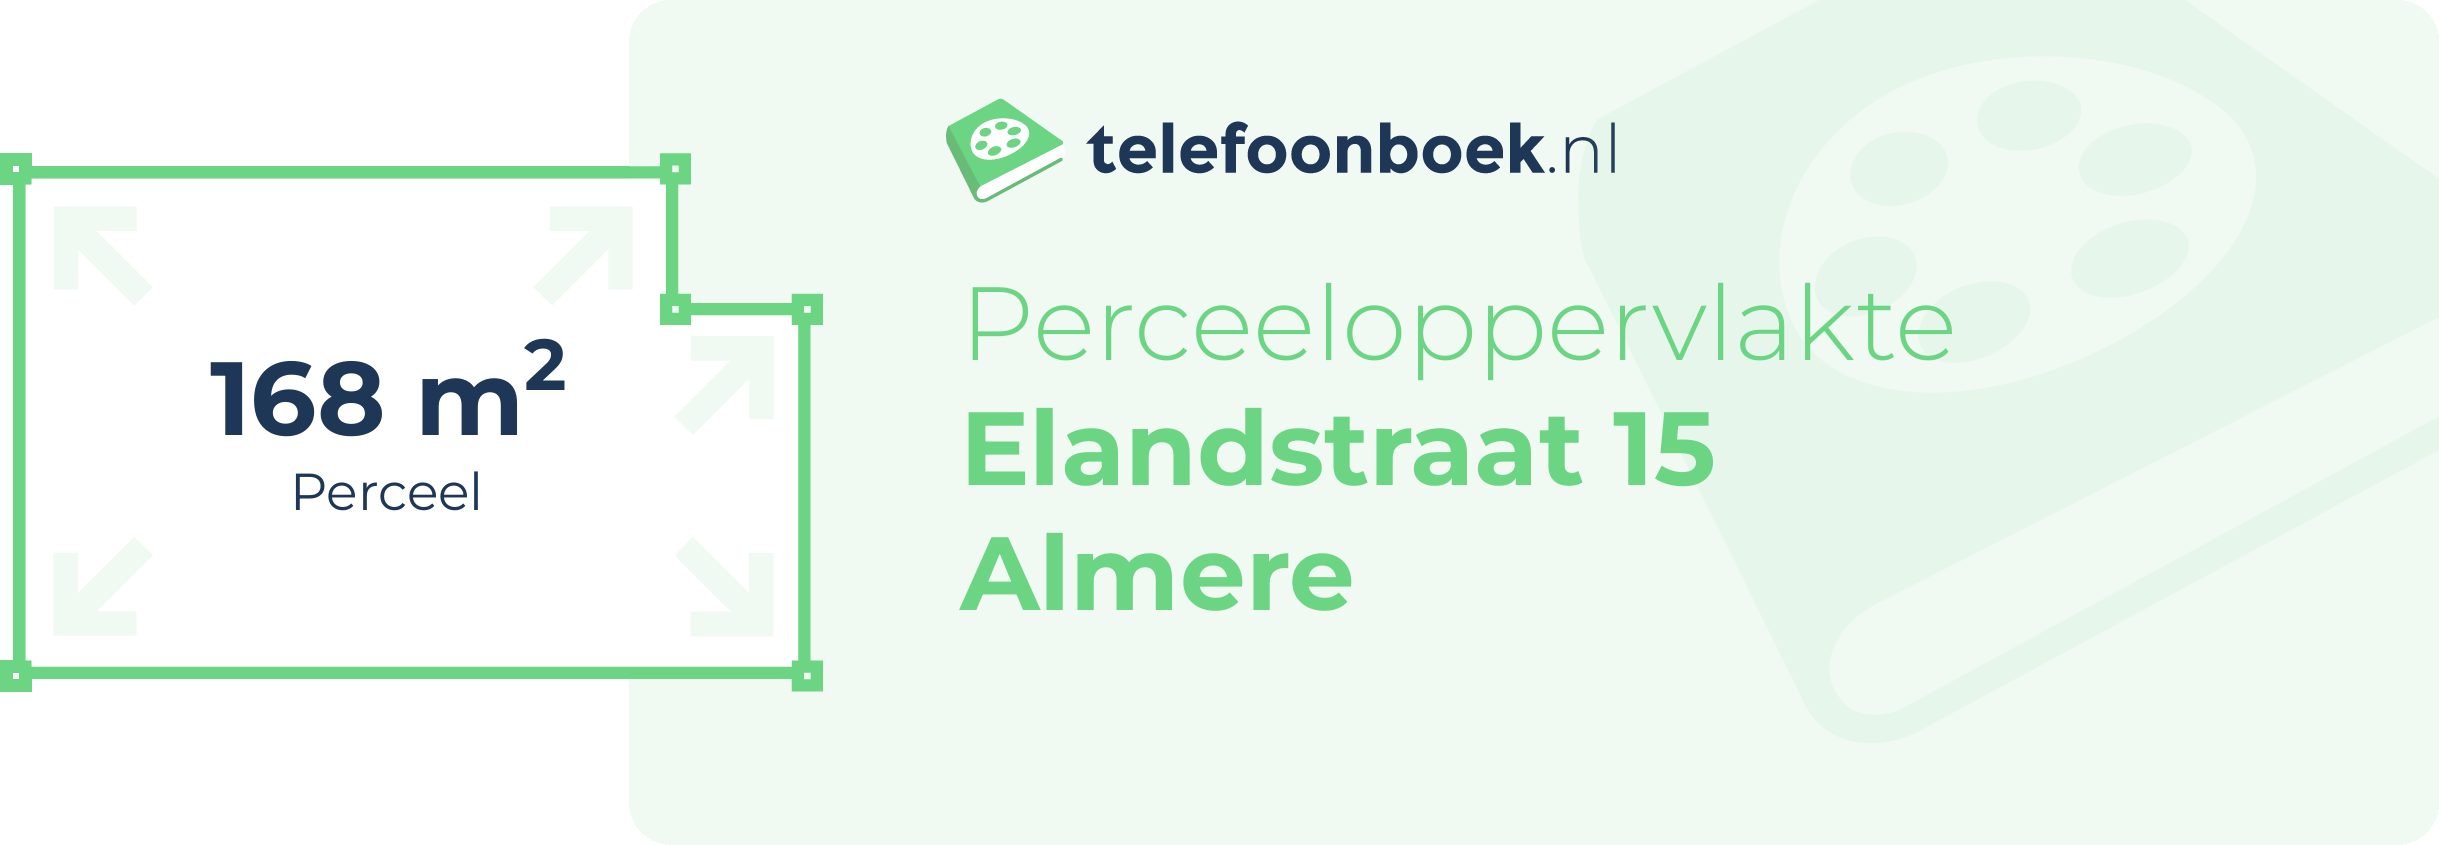 Perceeloppervlakte Elandstraat 15 Almere